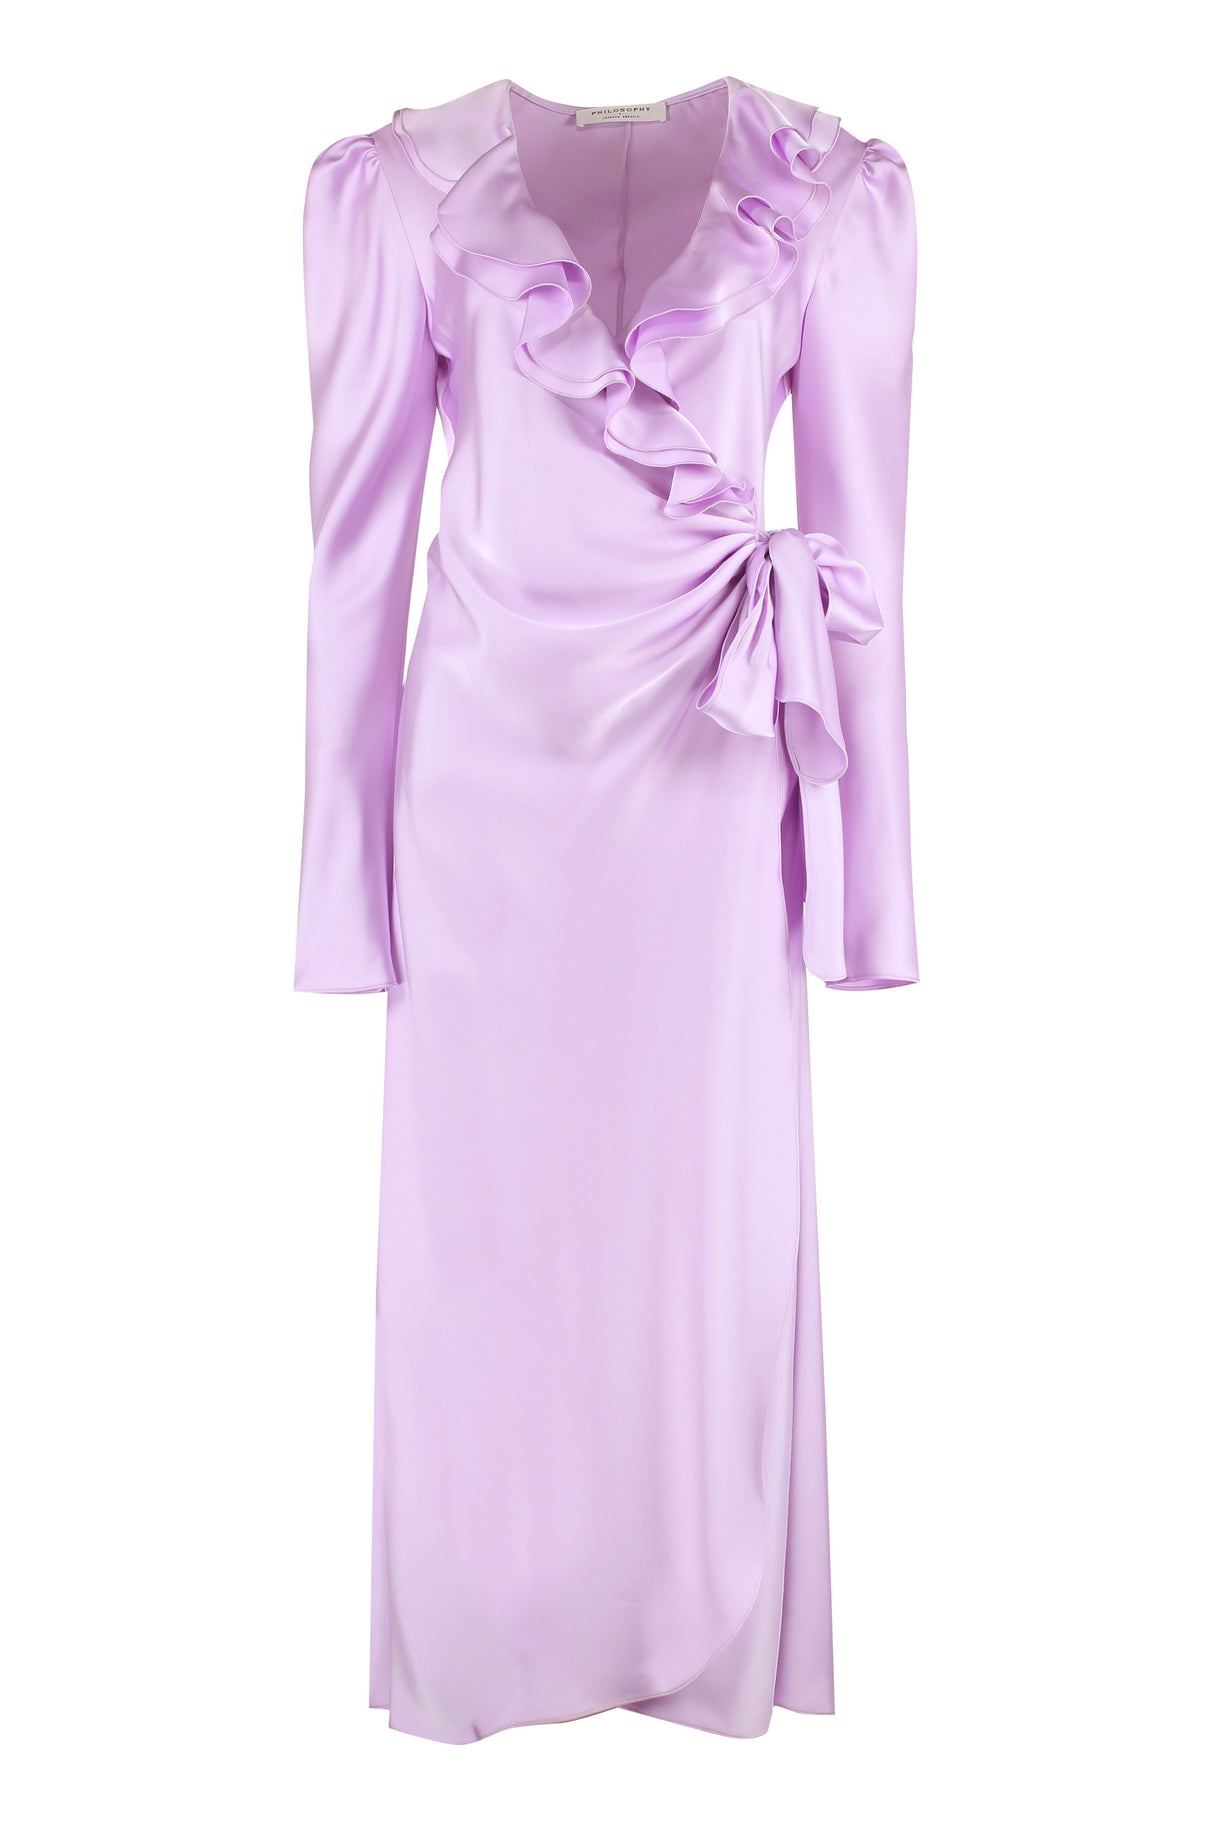 PHILOSOPHY DI LORENZO SERAFINI Frill Wrap Dress in Purple - FW23 Collection